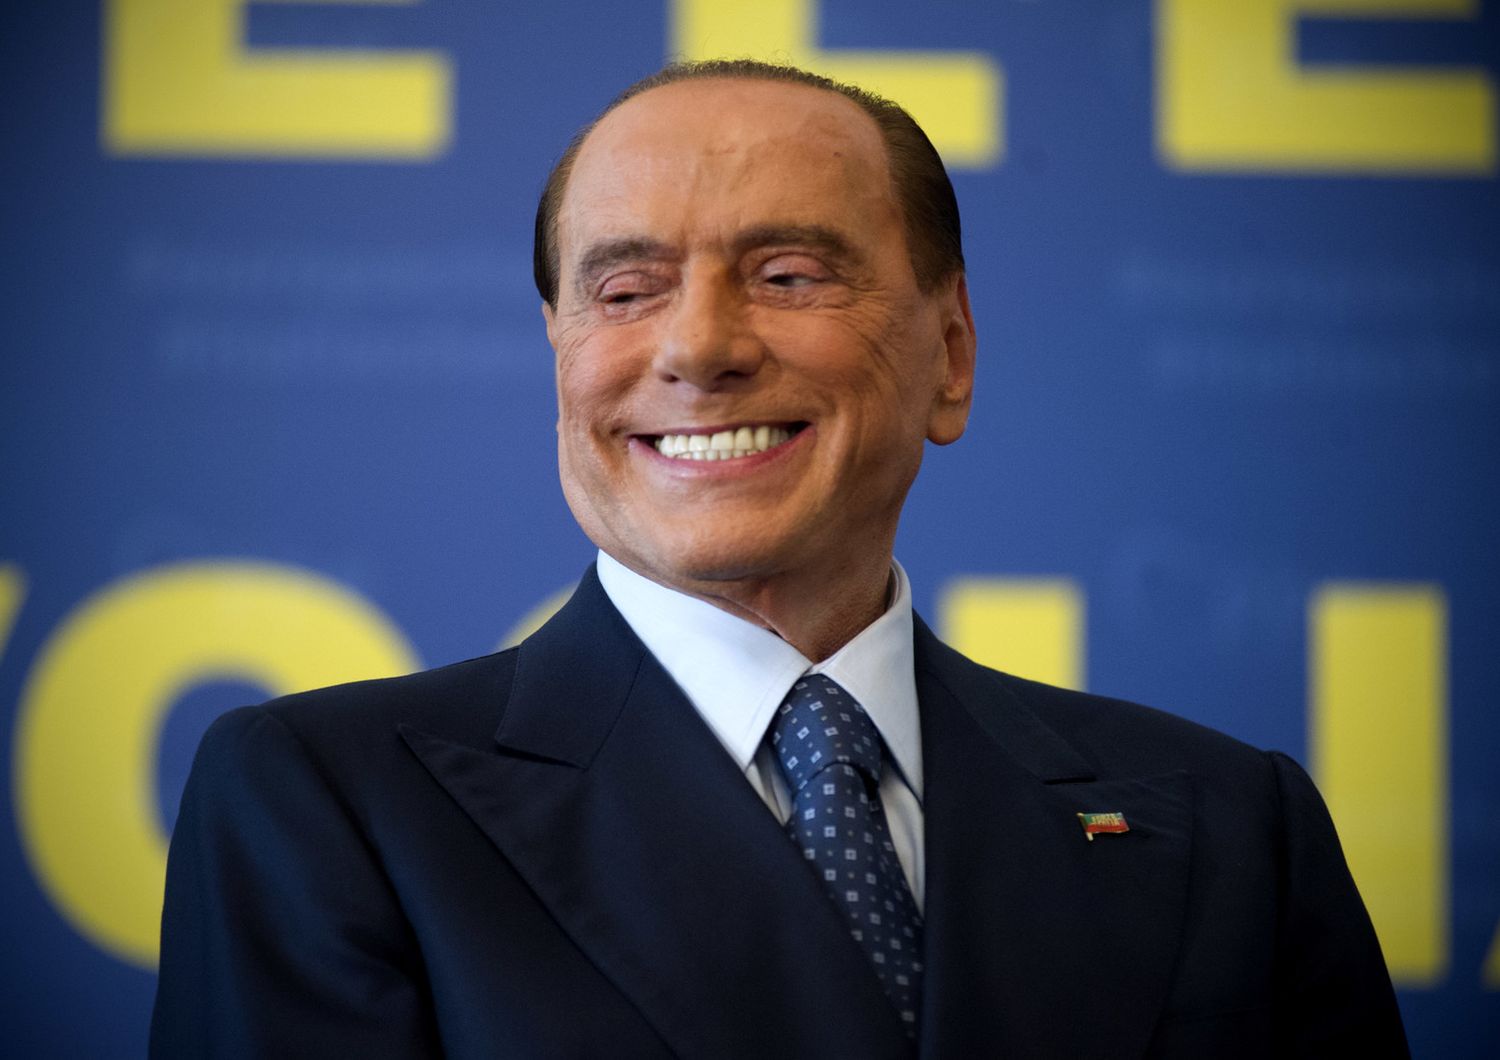 Silvo Berlusconi